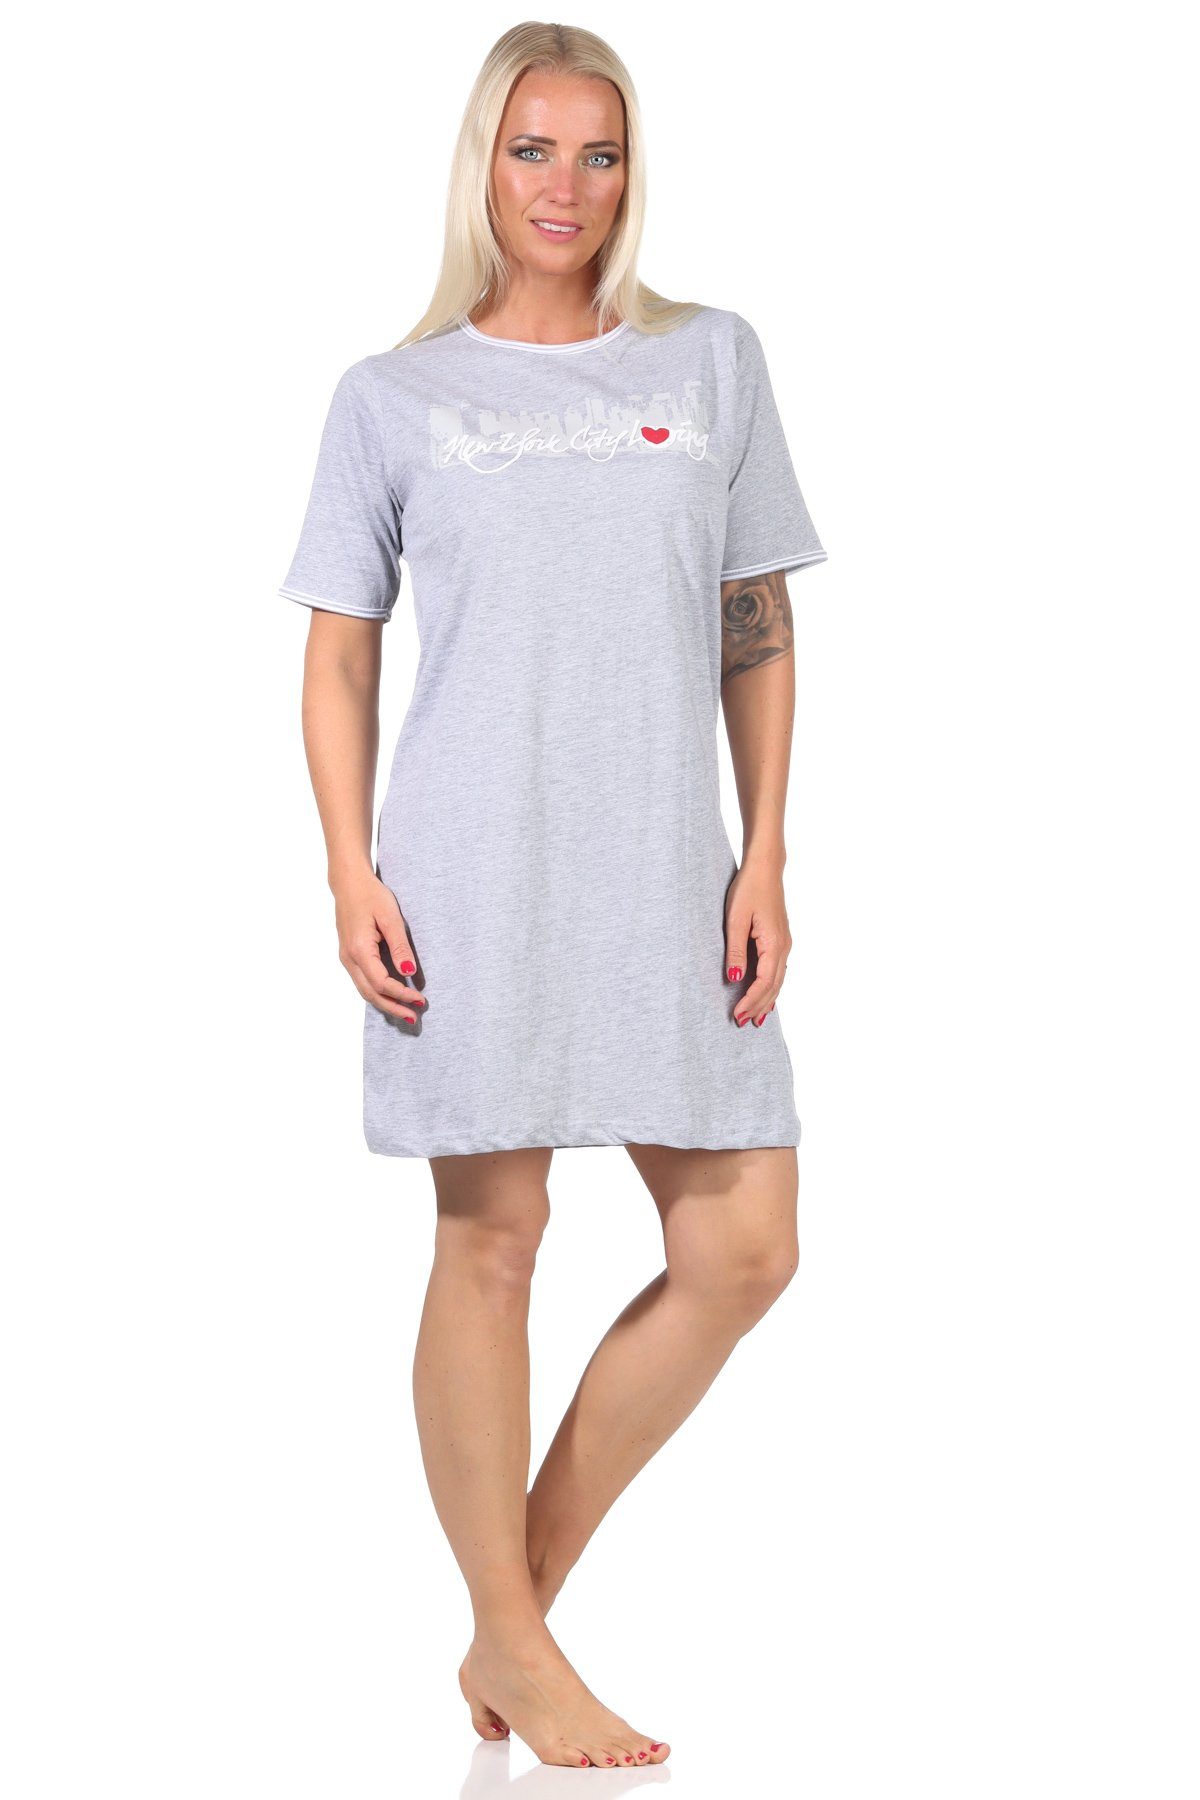 kurzarm Front-Print "New York Damen mit Loving" City Normann grau-melange Nachthemd Nachthemd